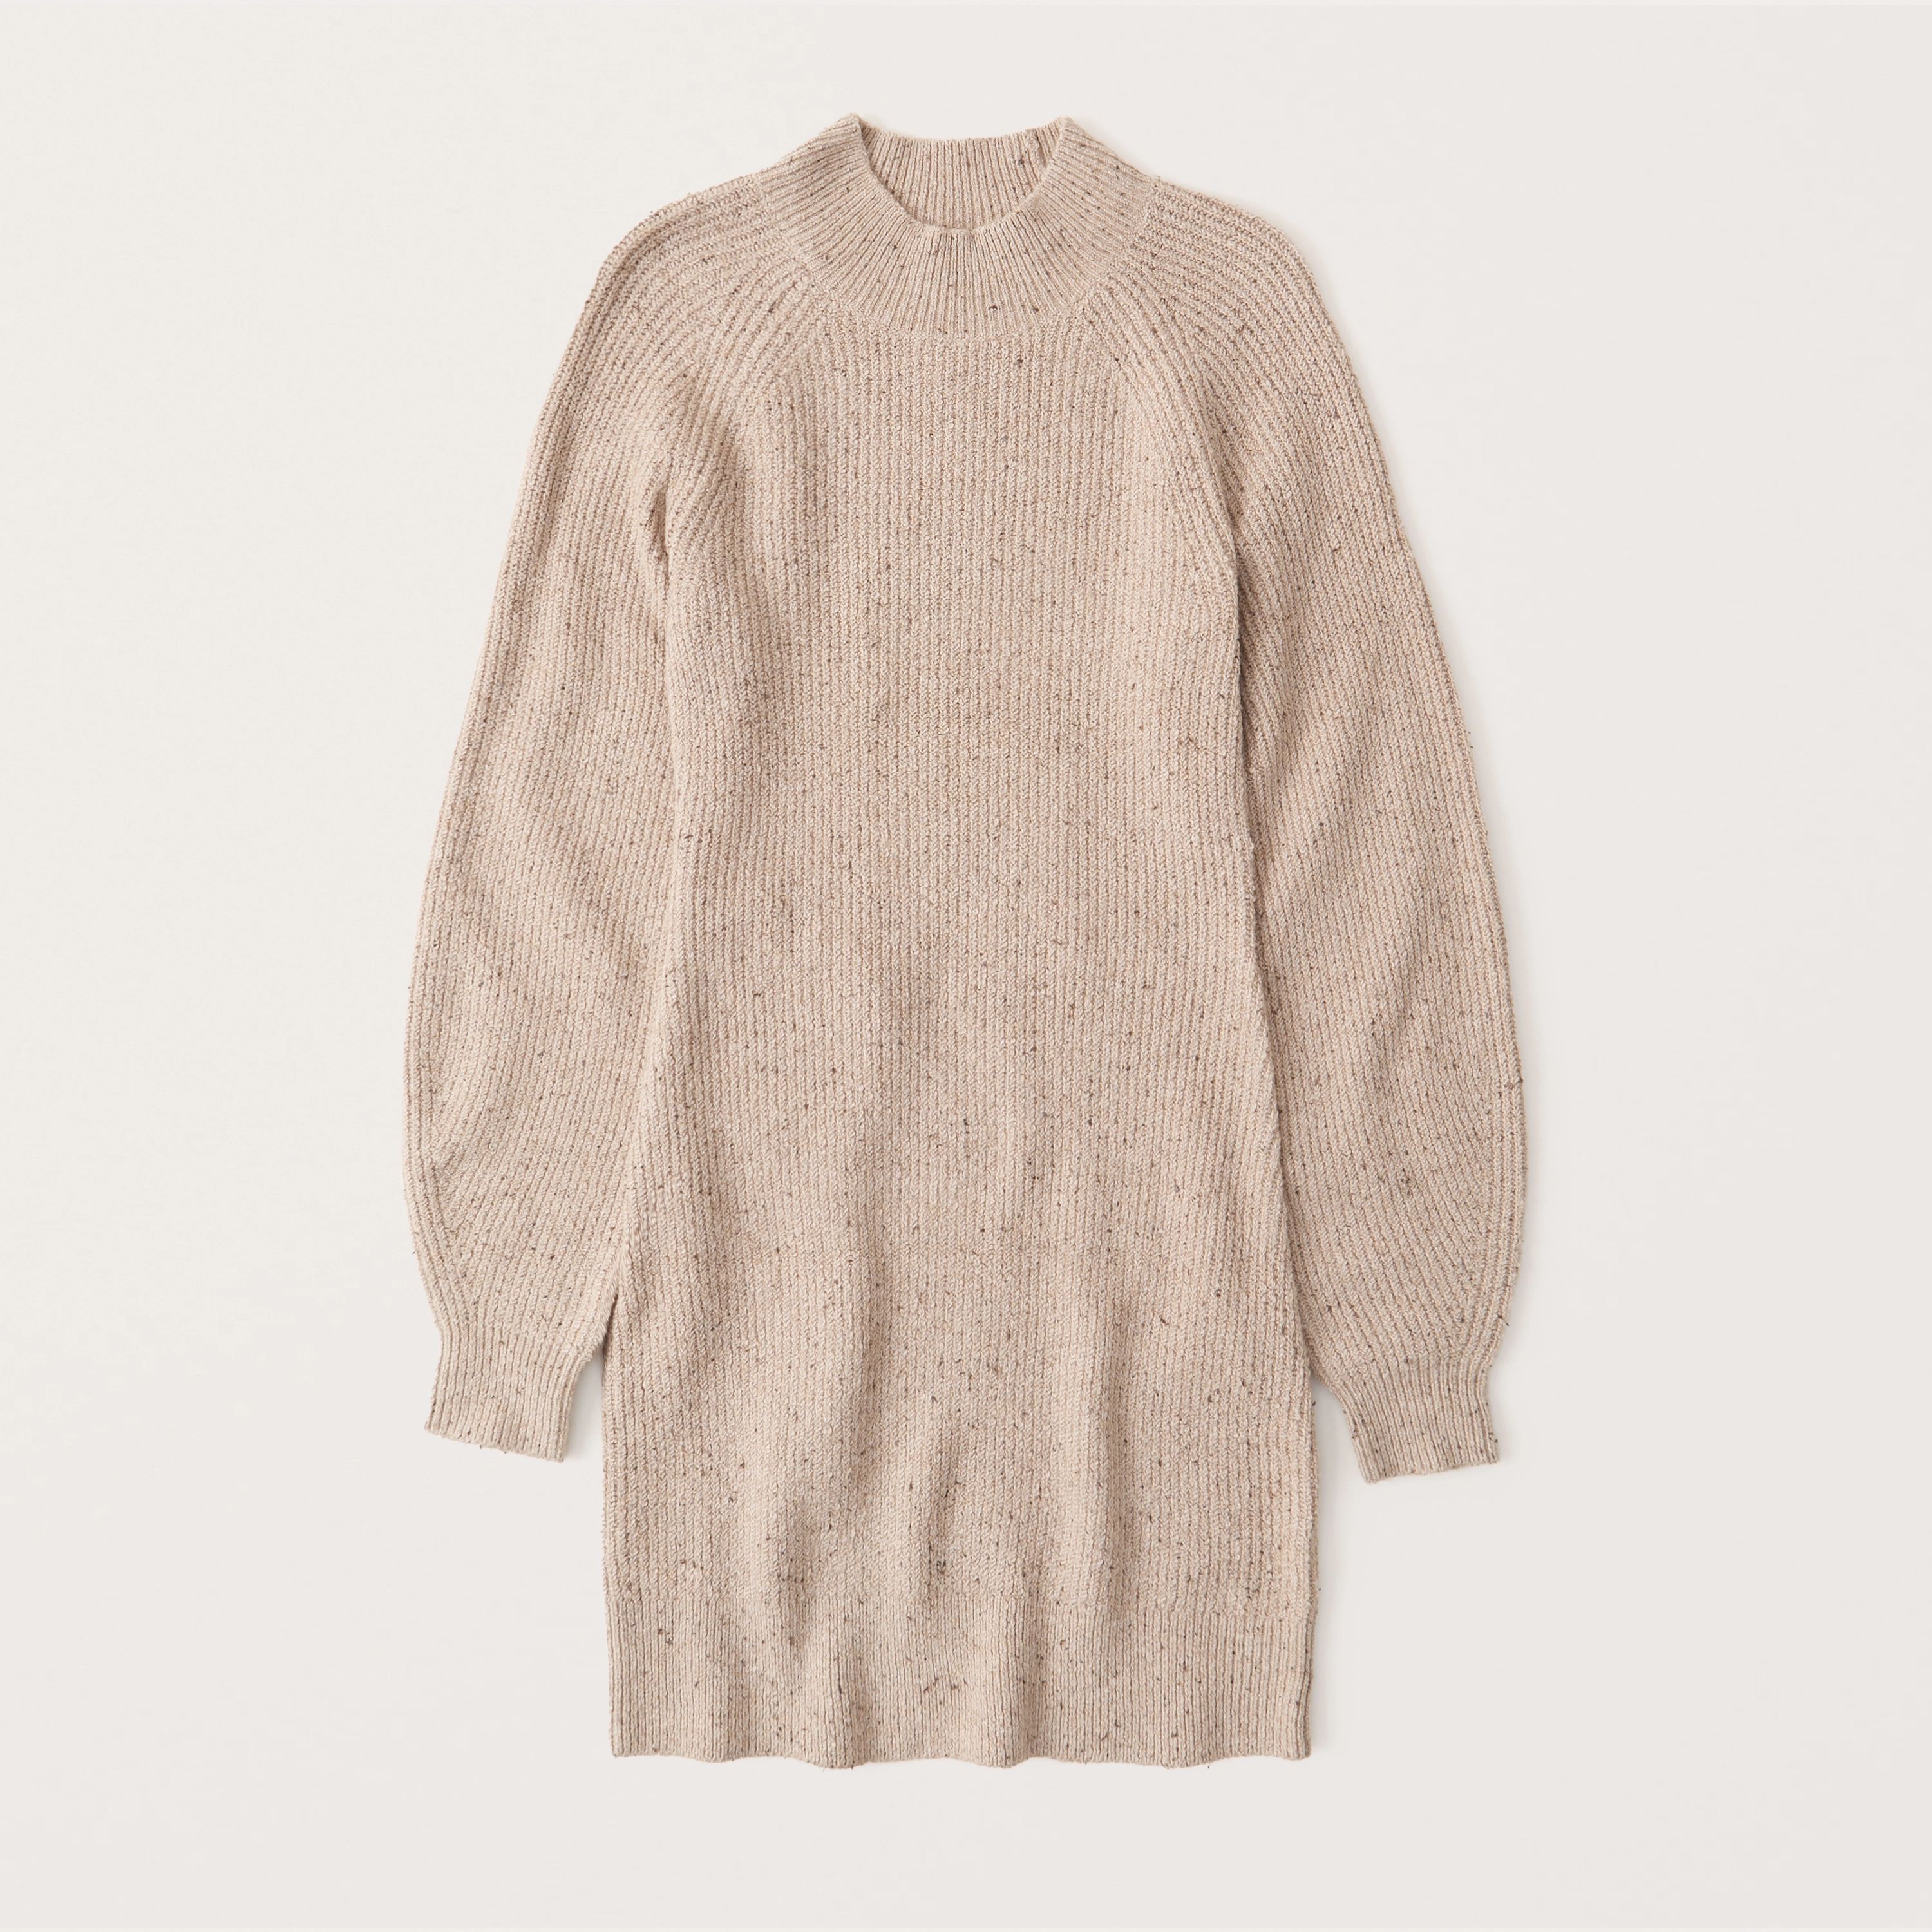 Mockneck Sweater Dress | Abercrombie & Fitch (US)